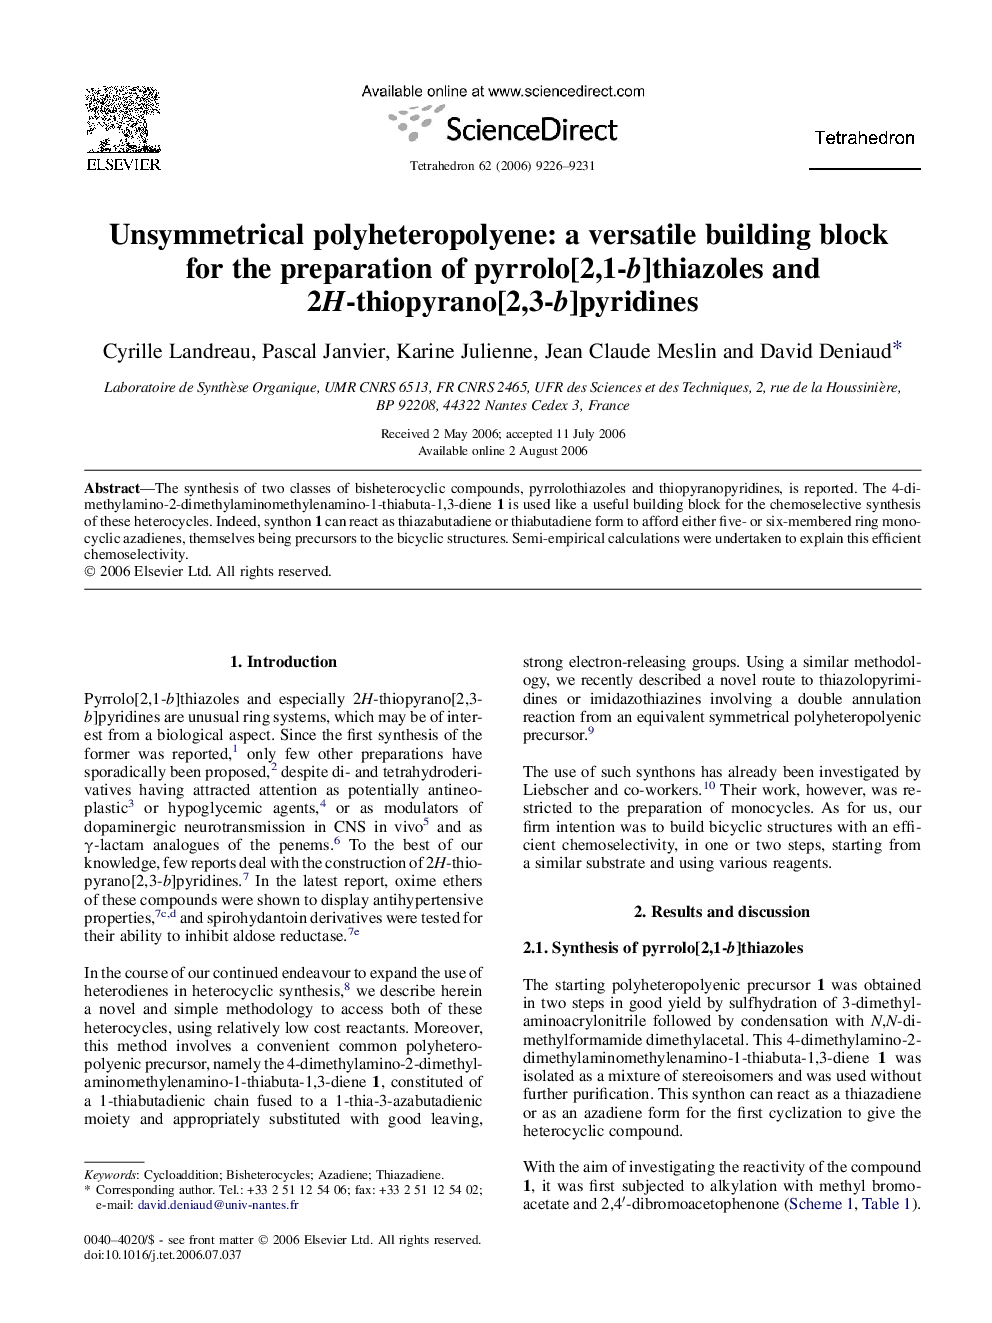 Unsymmetrical polyheteropolyene: a versatile building block for the preparation of pyrrolo[2,1-b]thiazoles and 2H-thiopyrano[2,3-b]pyridines